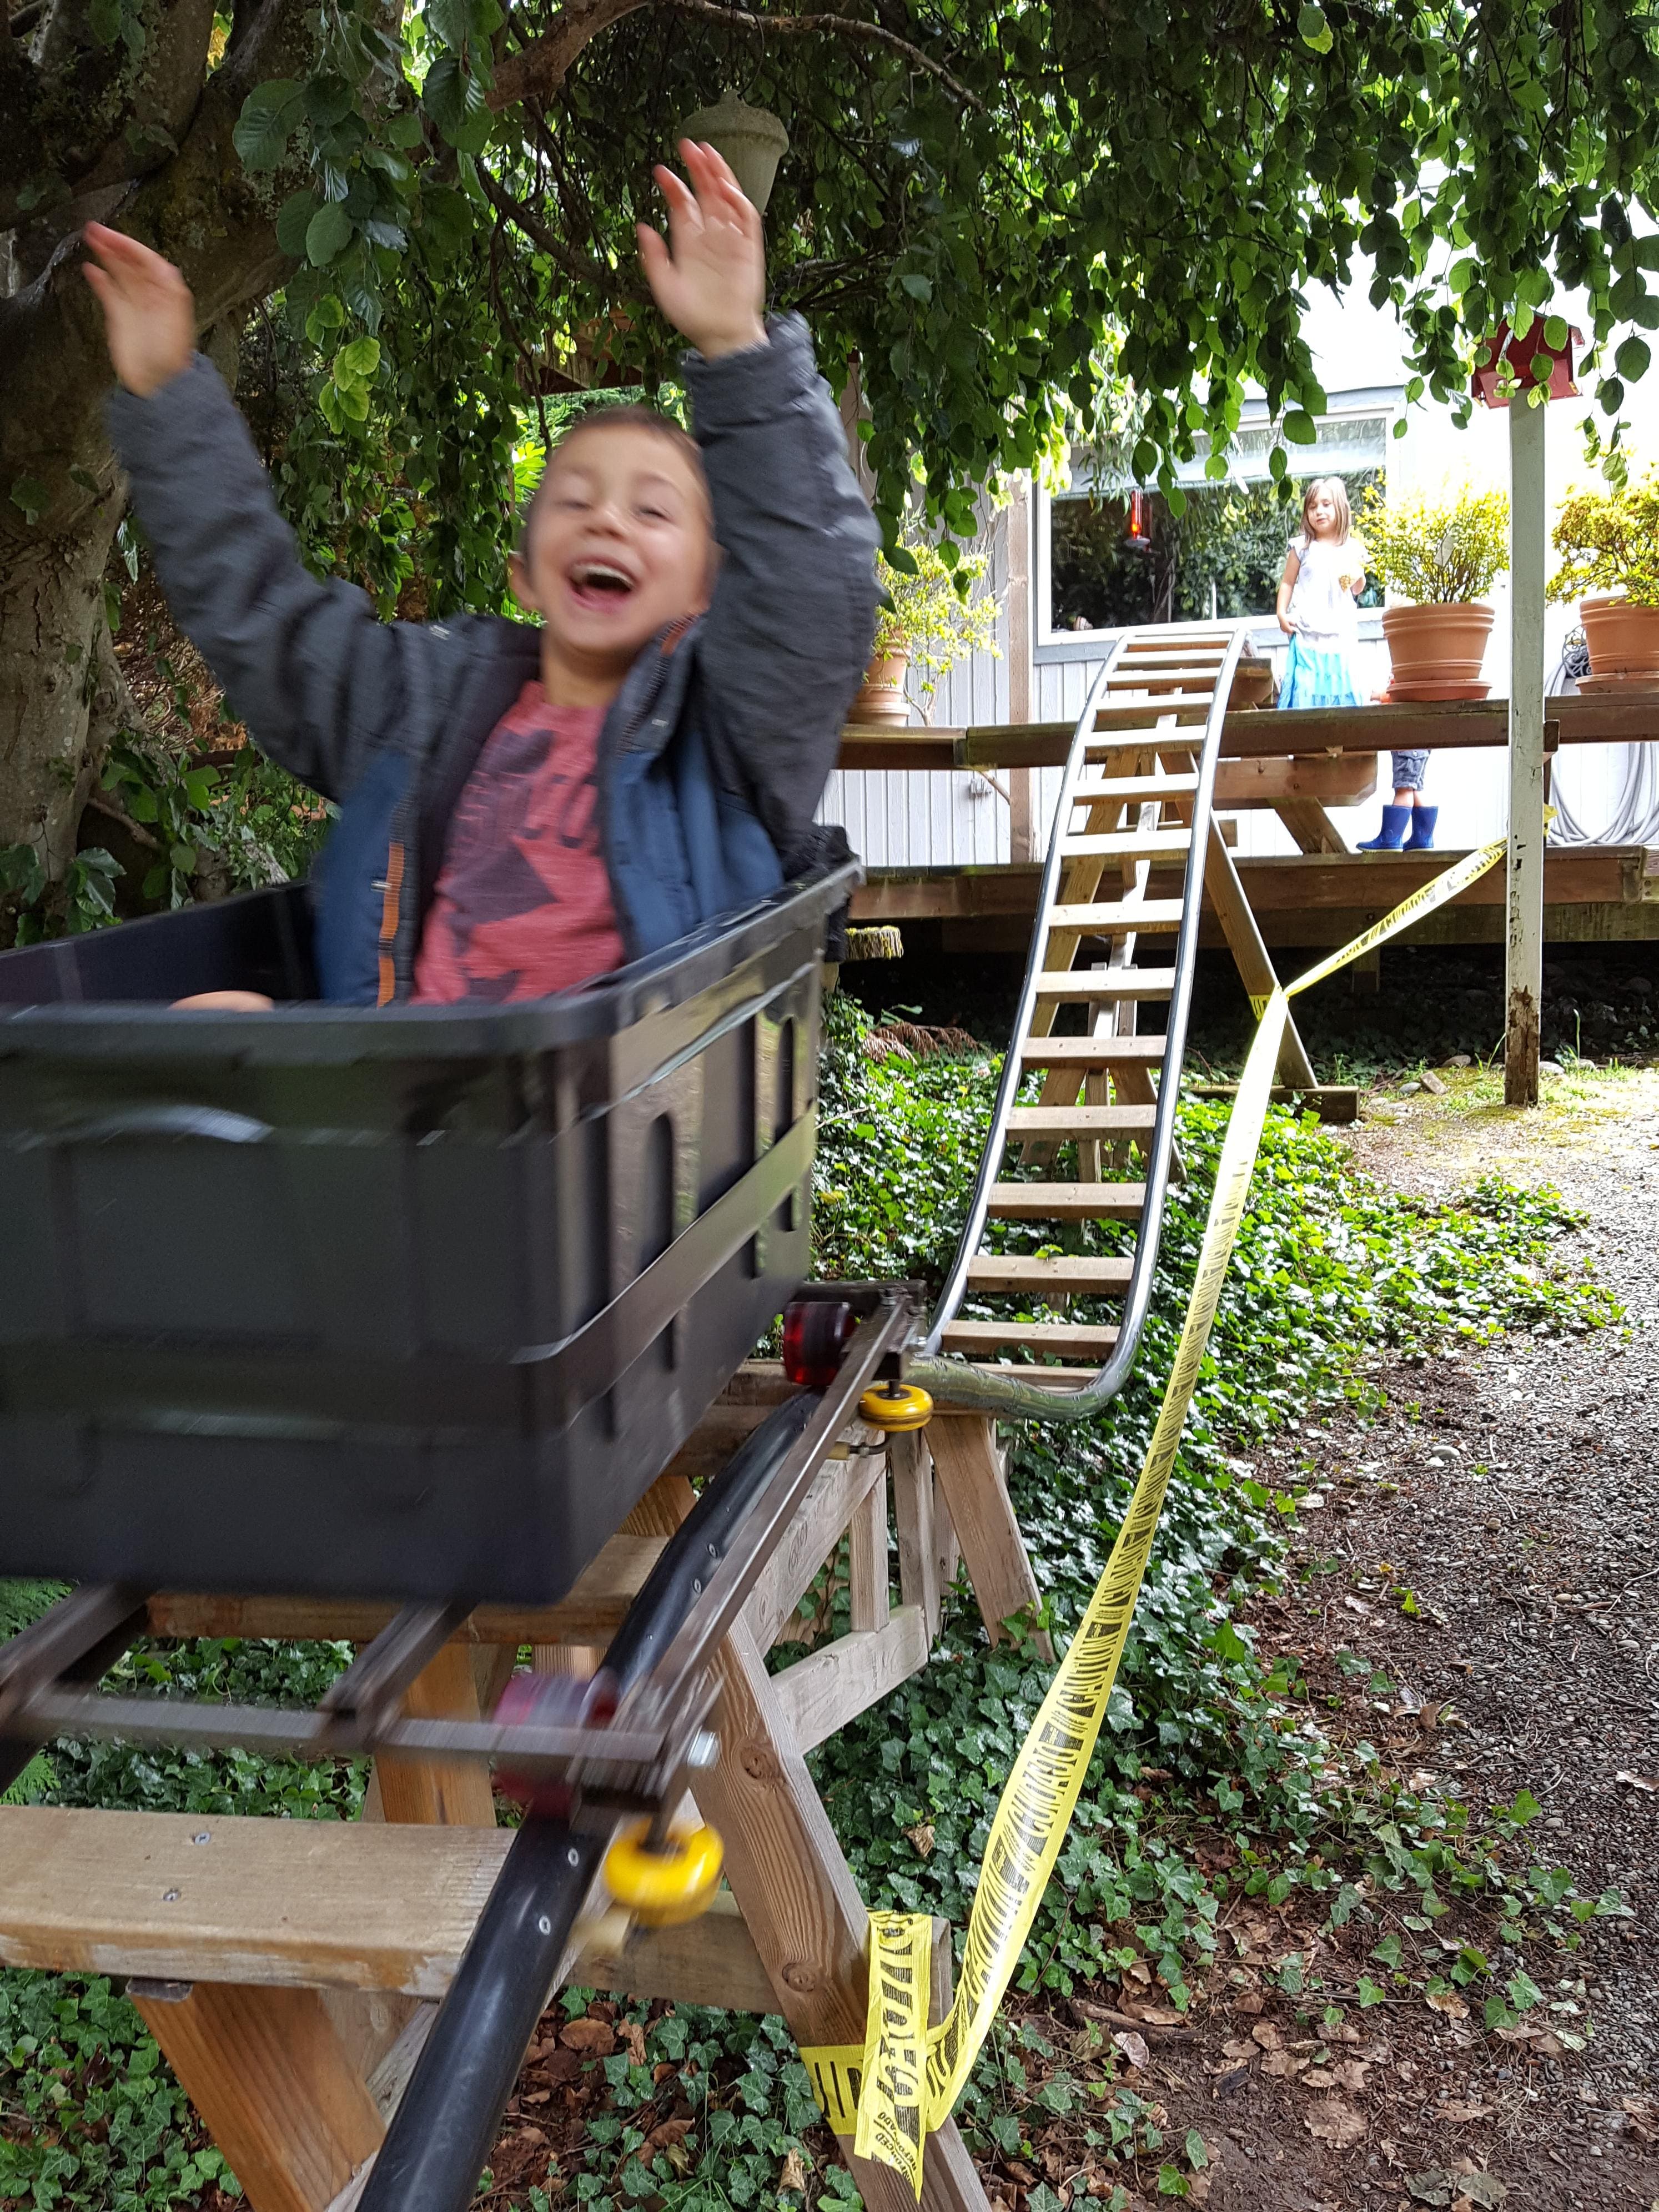 Retired Aerospace Engineer Builds a Backyard Roller Coaster for His Grandchildren